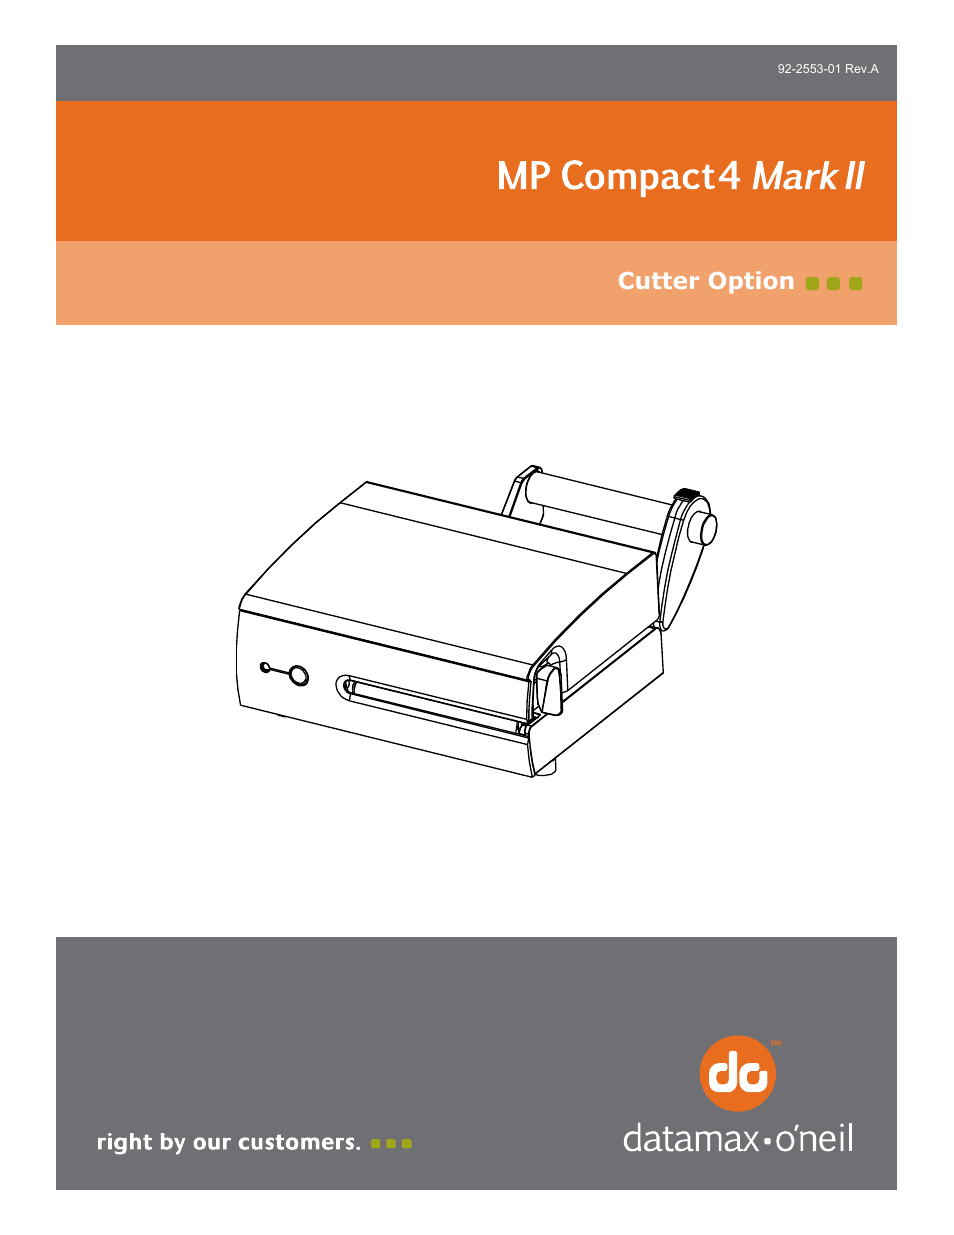 MP Compact4 Mark II Cutter Option